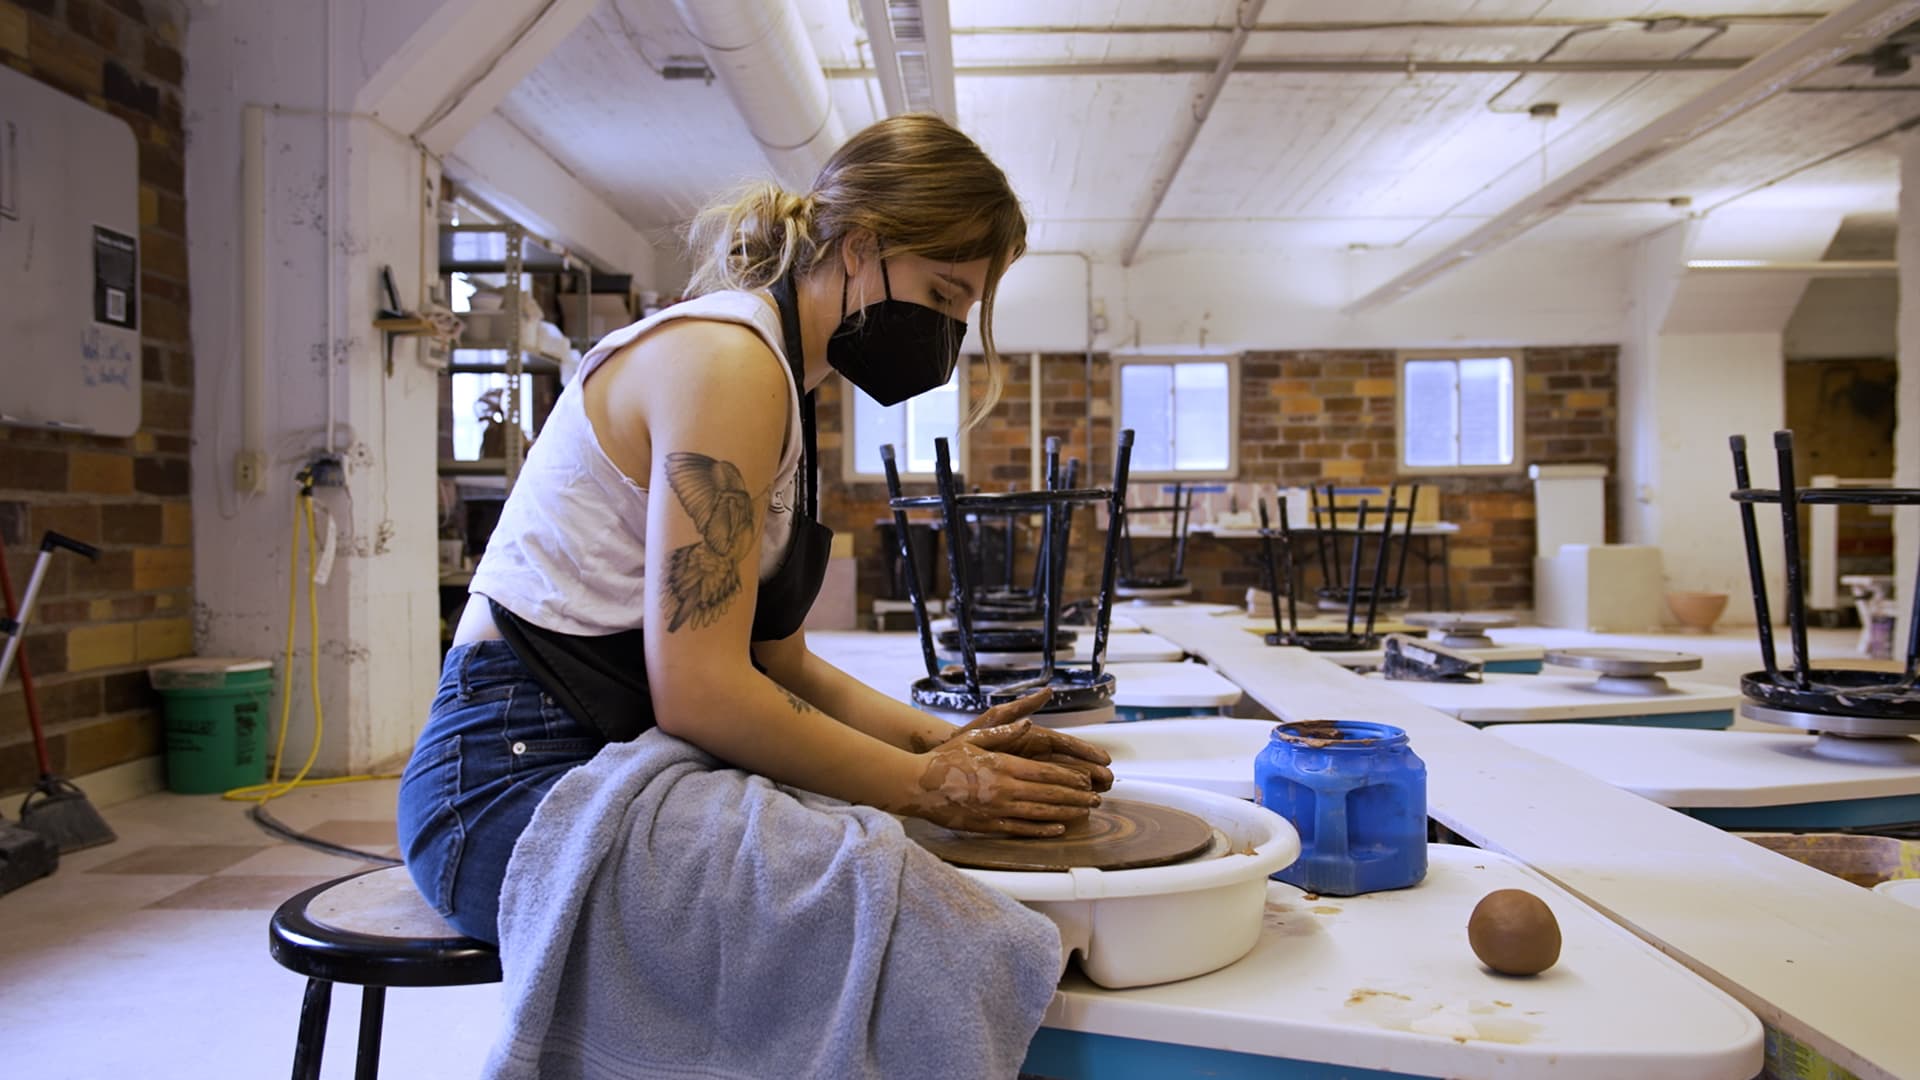 Aspeyn Langhals has made $500 so far selling pottery and digital art as a side hustle.